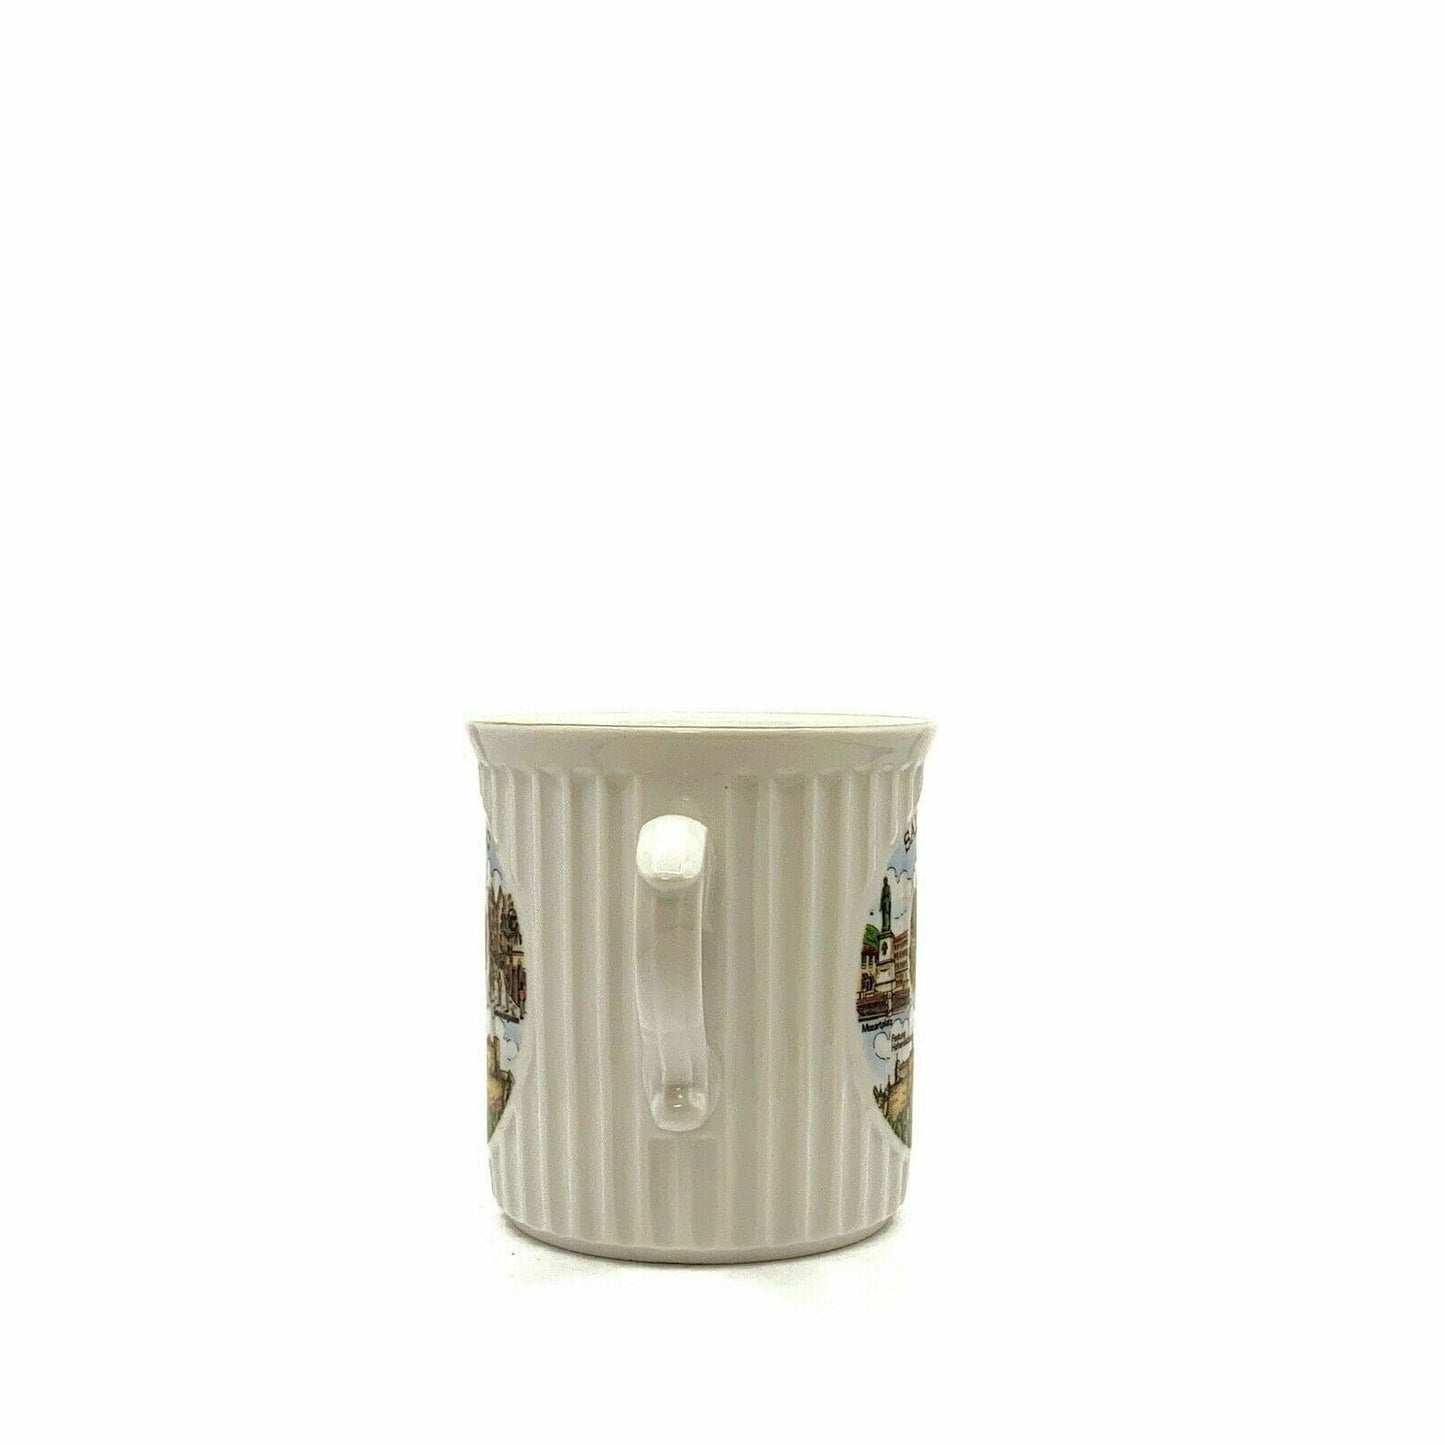 Charming Salzburg Austria Souvenir Coffee Tea Cup - 10oz White Porcelain